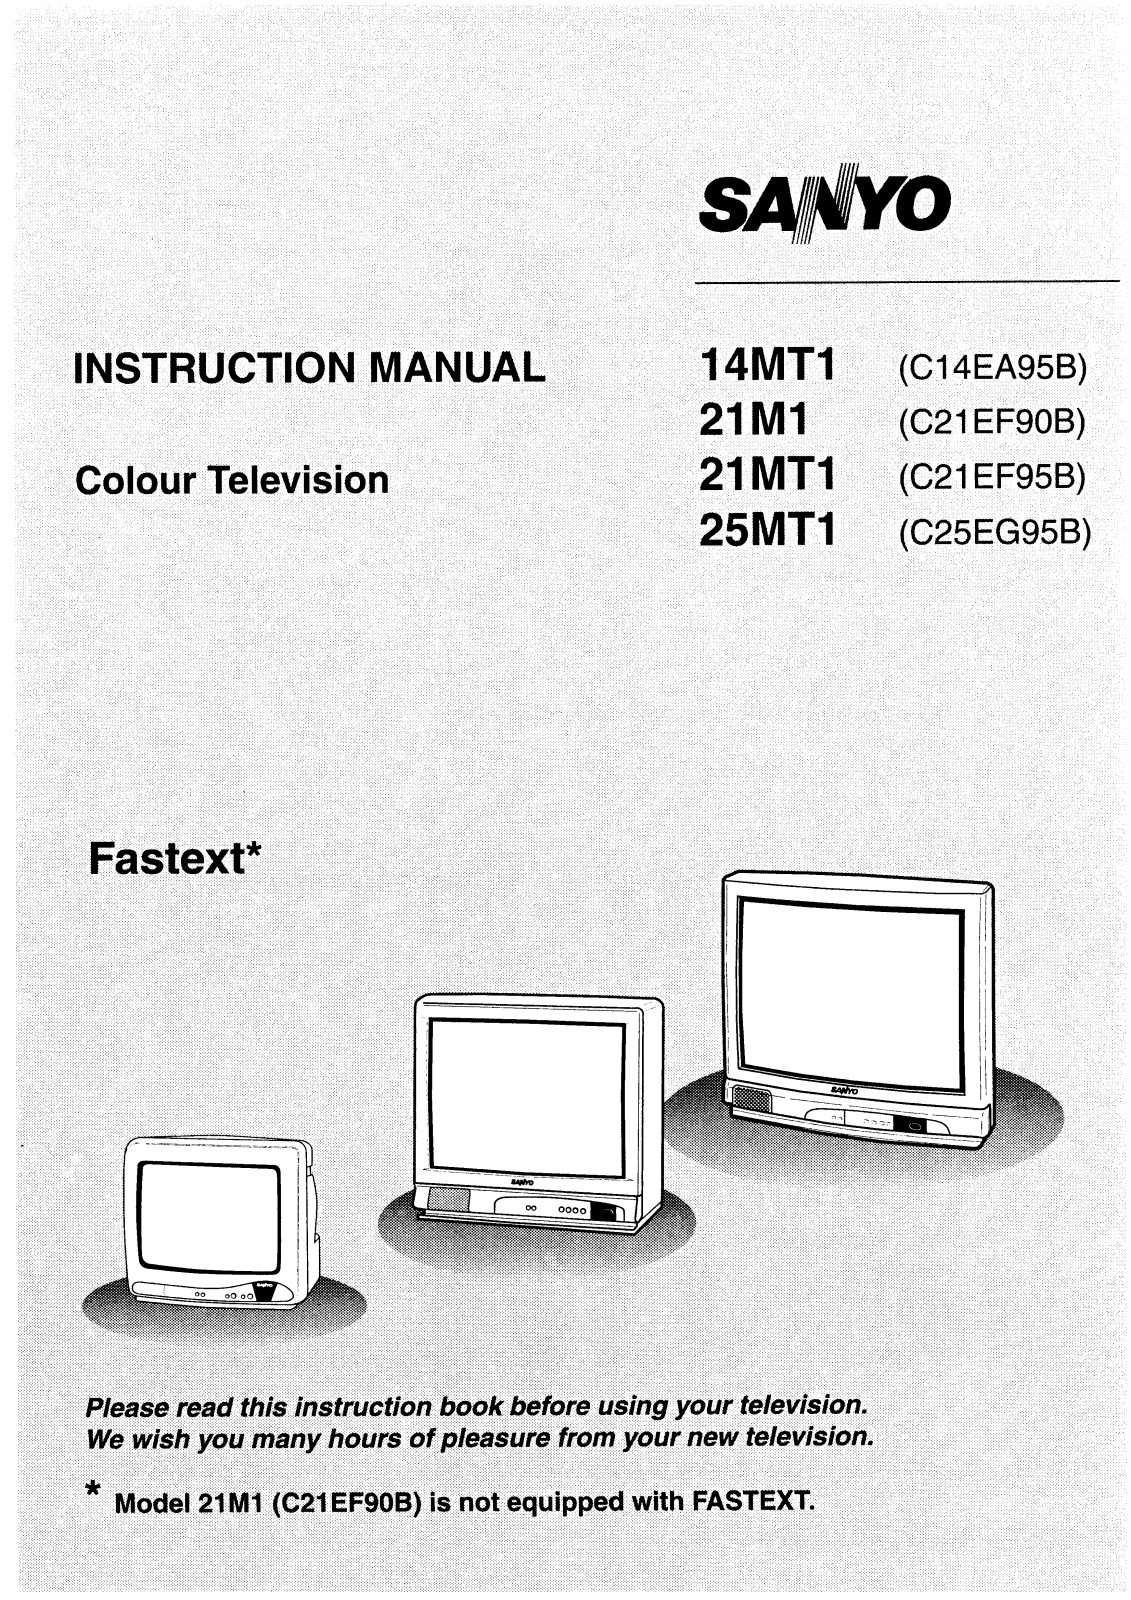 Sanyo 14MT1, 21M1, 21MT1, 25MT1 Instruction Manual